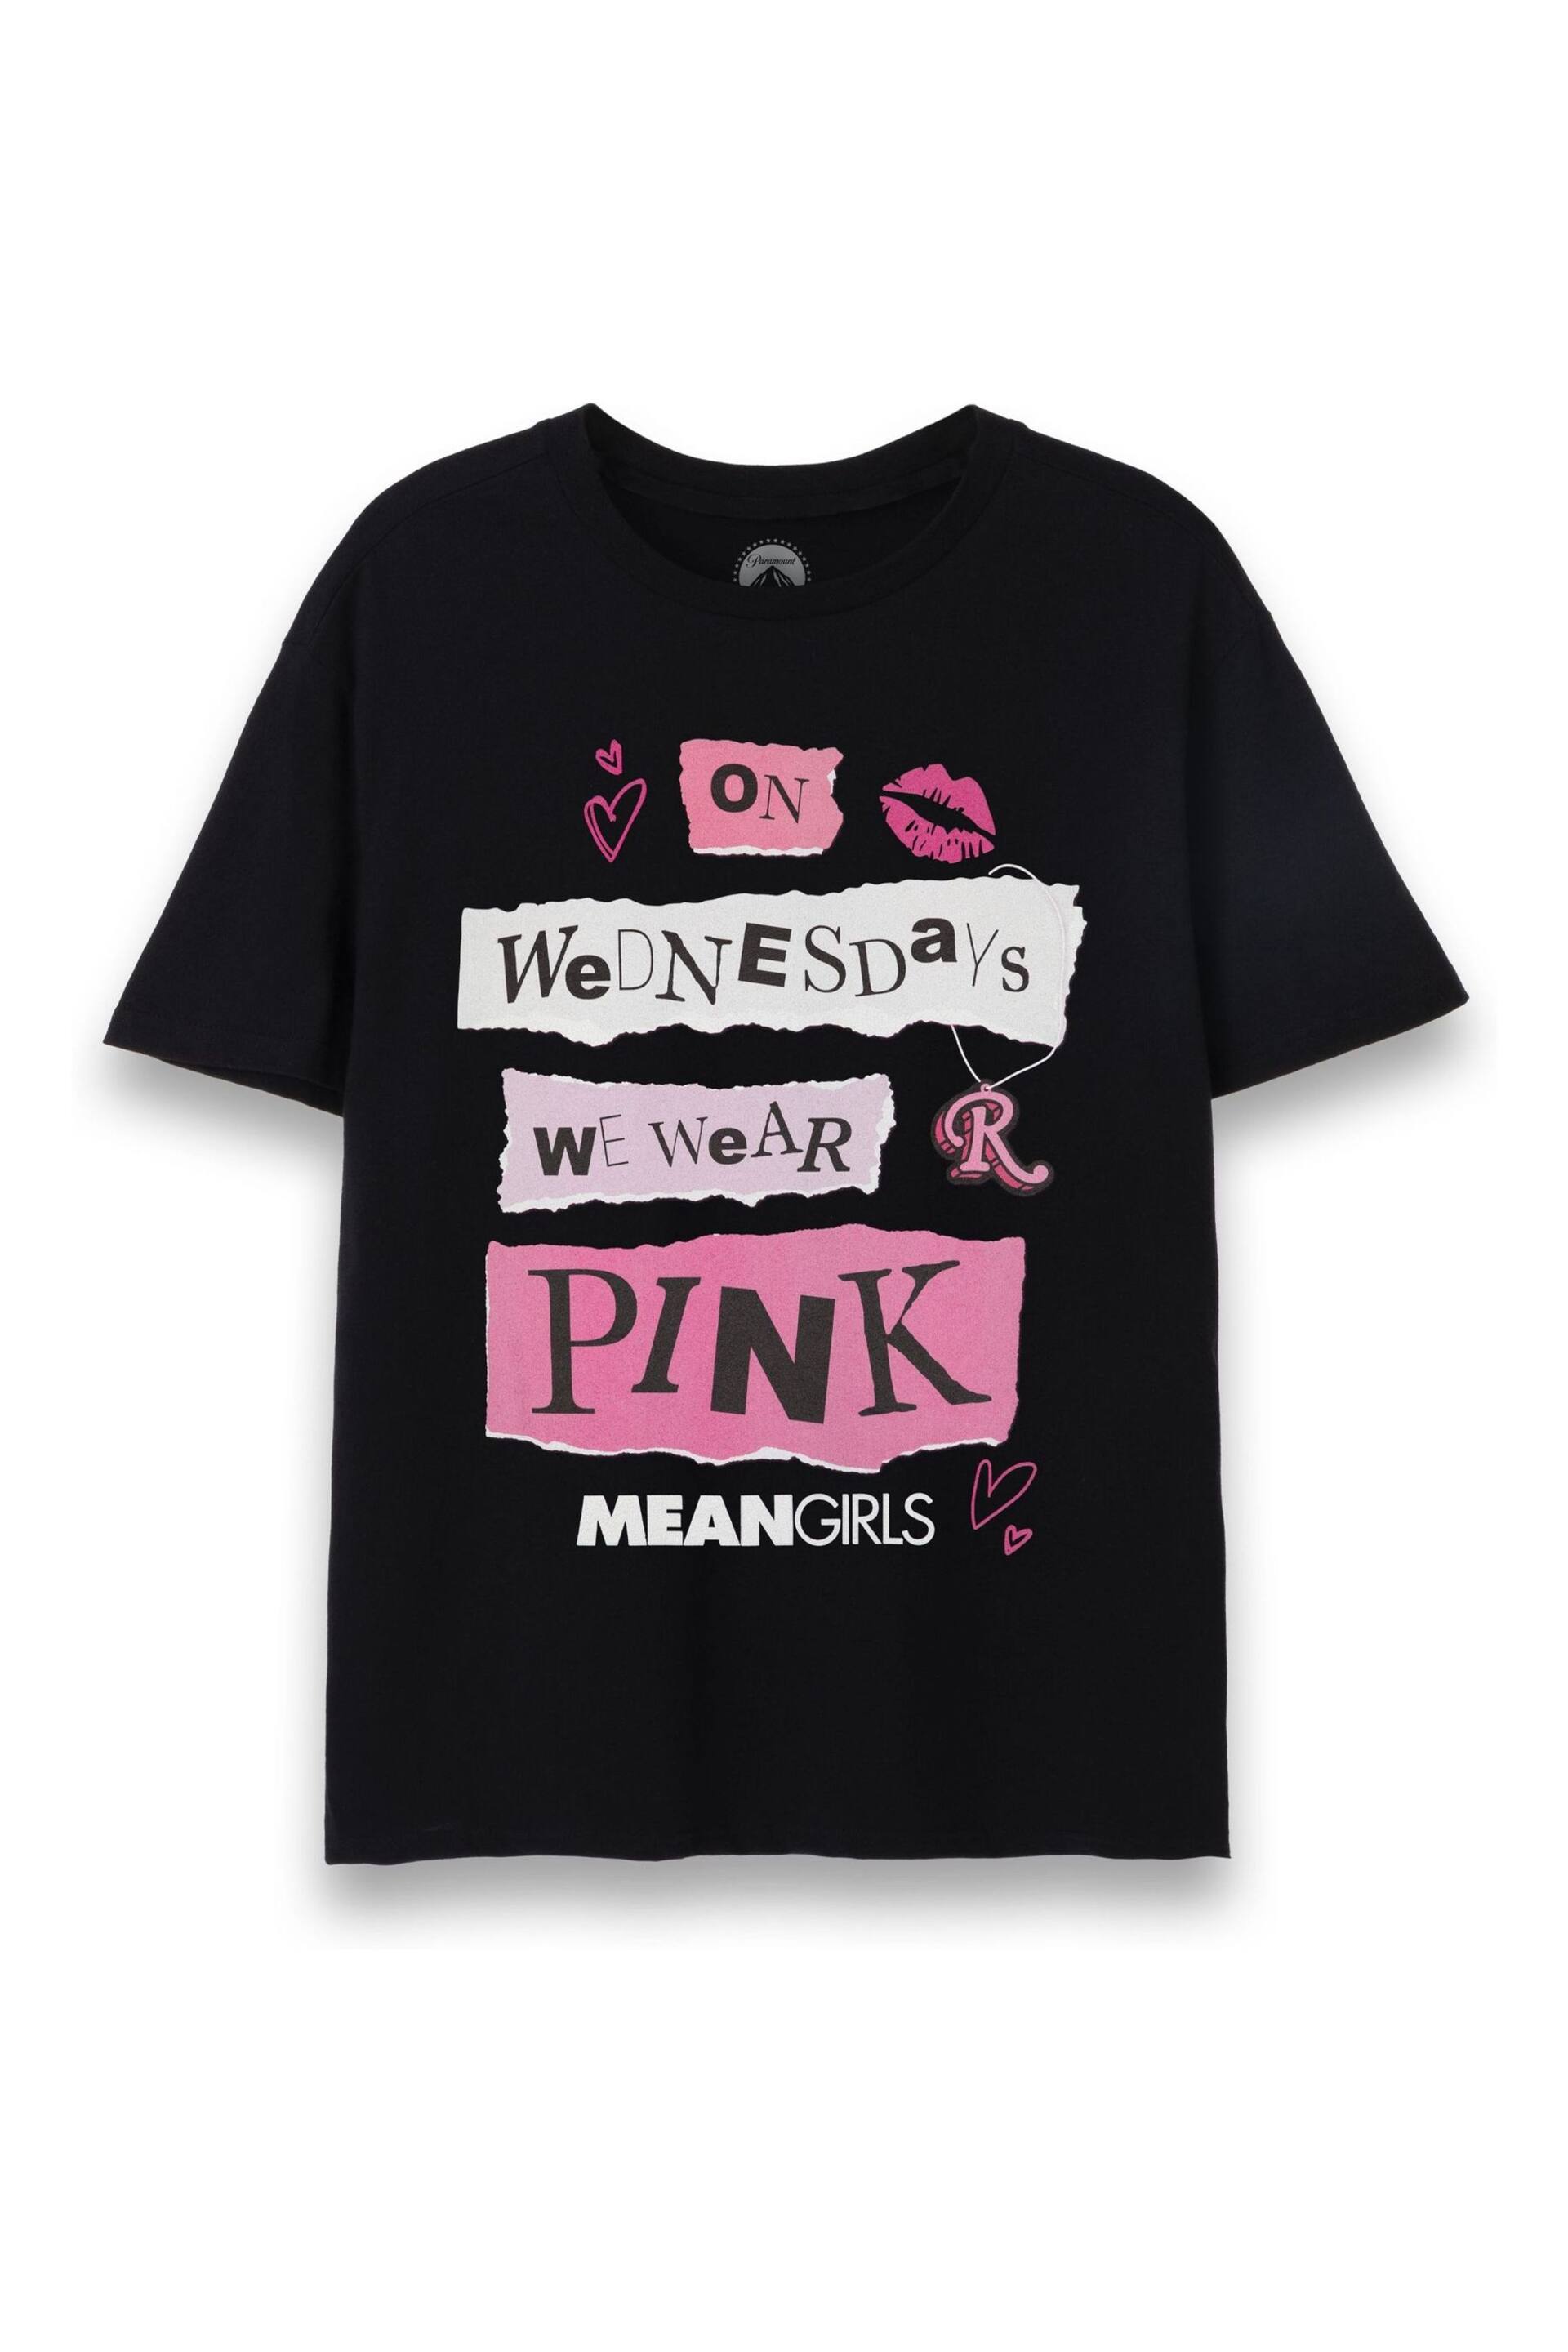 Vanilla Underground Black Mean Girls Ladies Licencing T-Shirt - Image 2 of 6